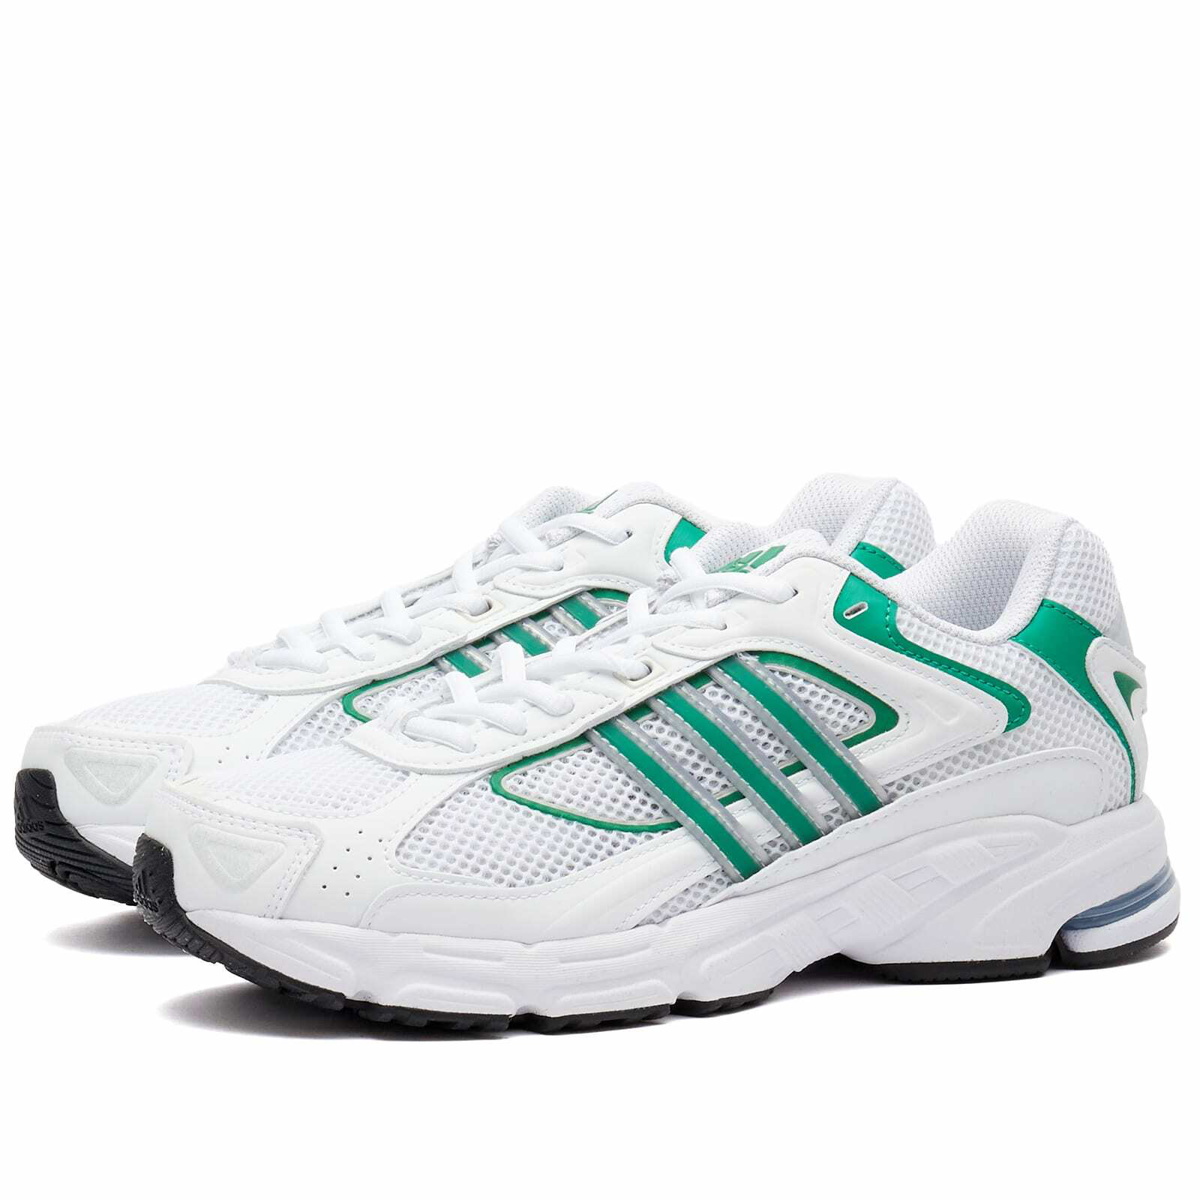 defensa ozono cometer Adidas Women's Response Cl W Sneakers in White/Court Green/Core Black adidas